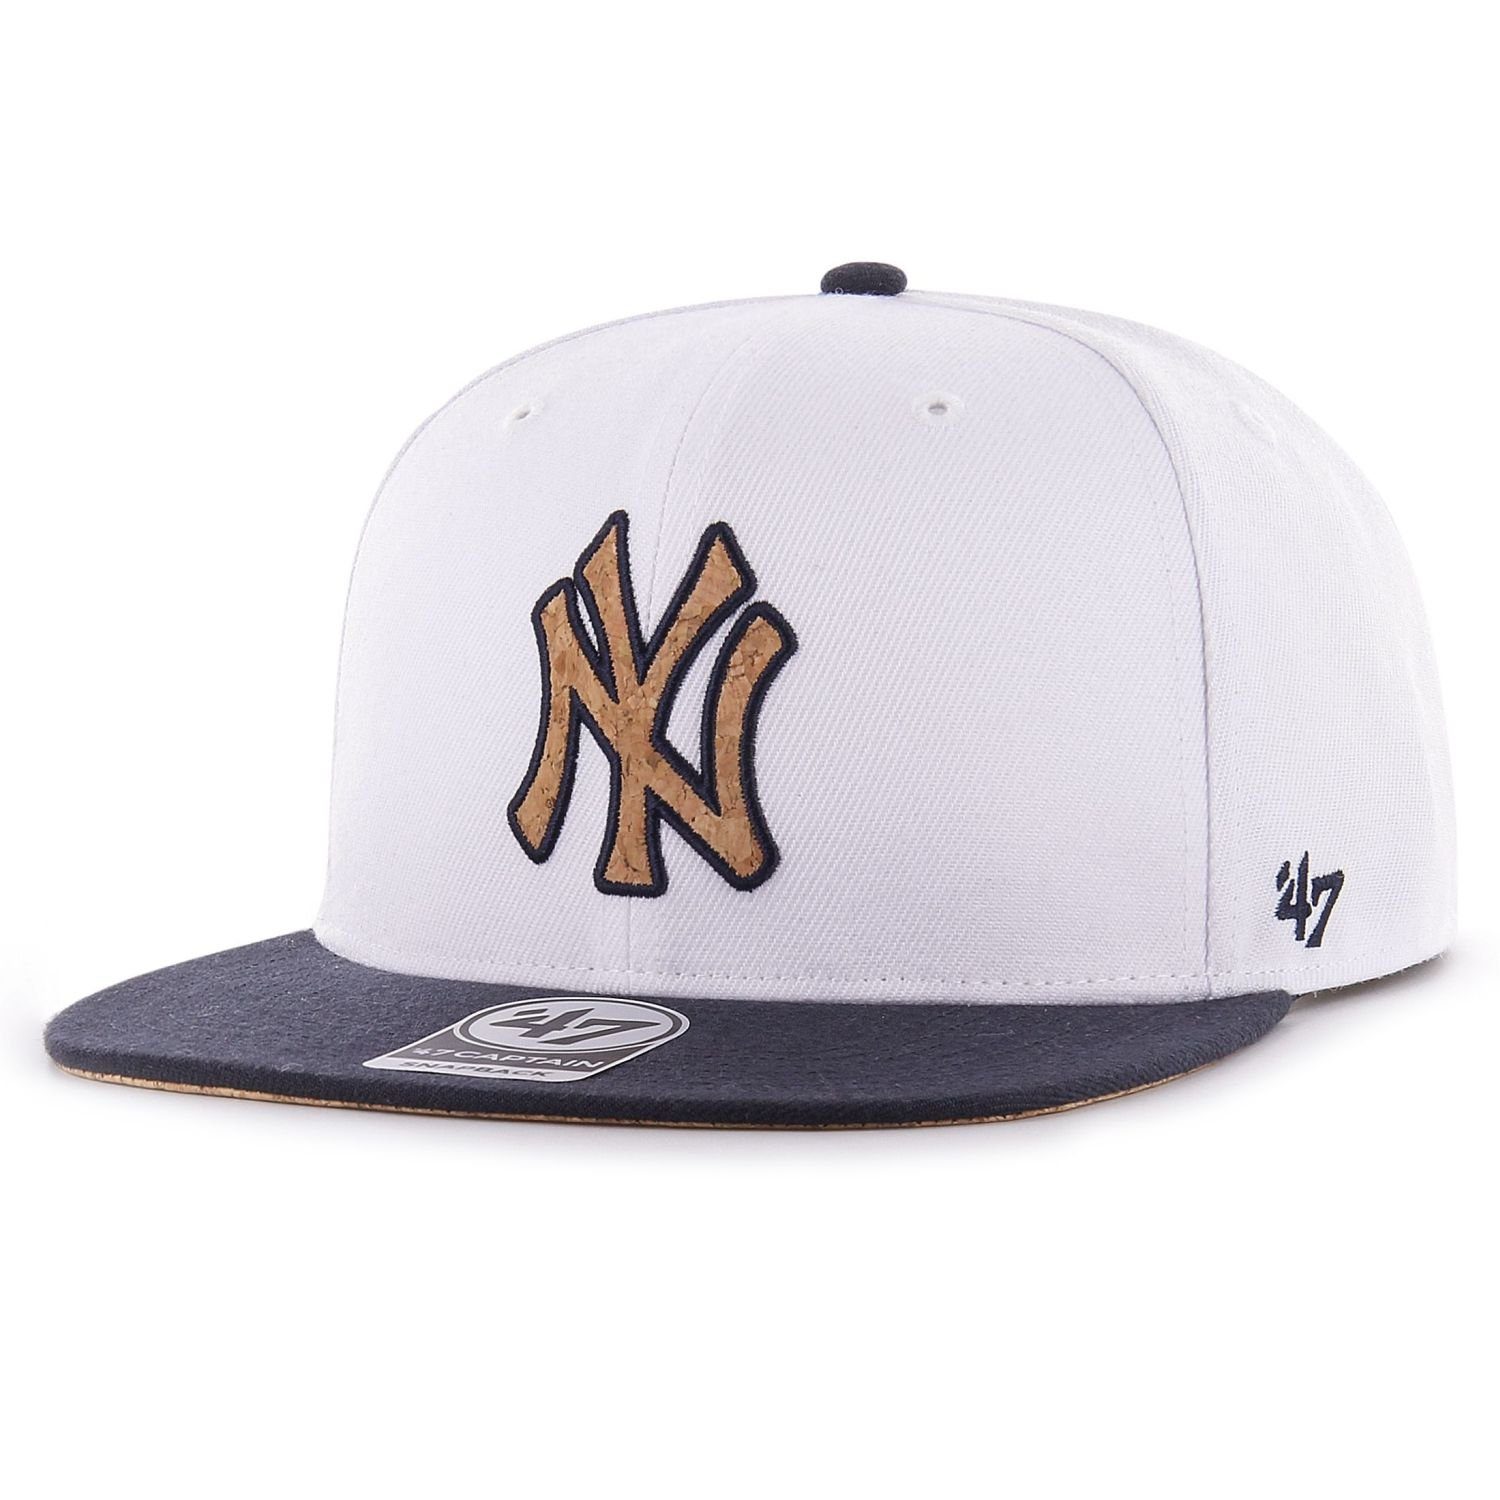 '47 Brand Snapback Cap Captain CORKSCREW New York Yankees